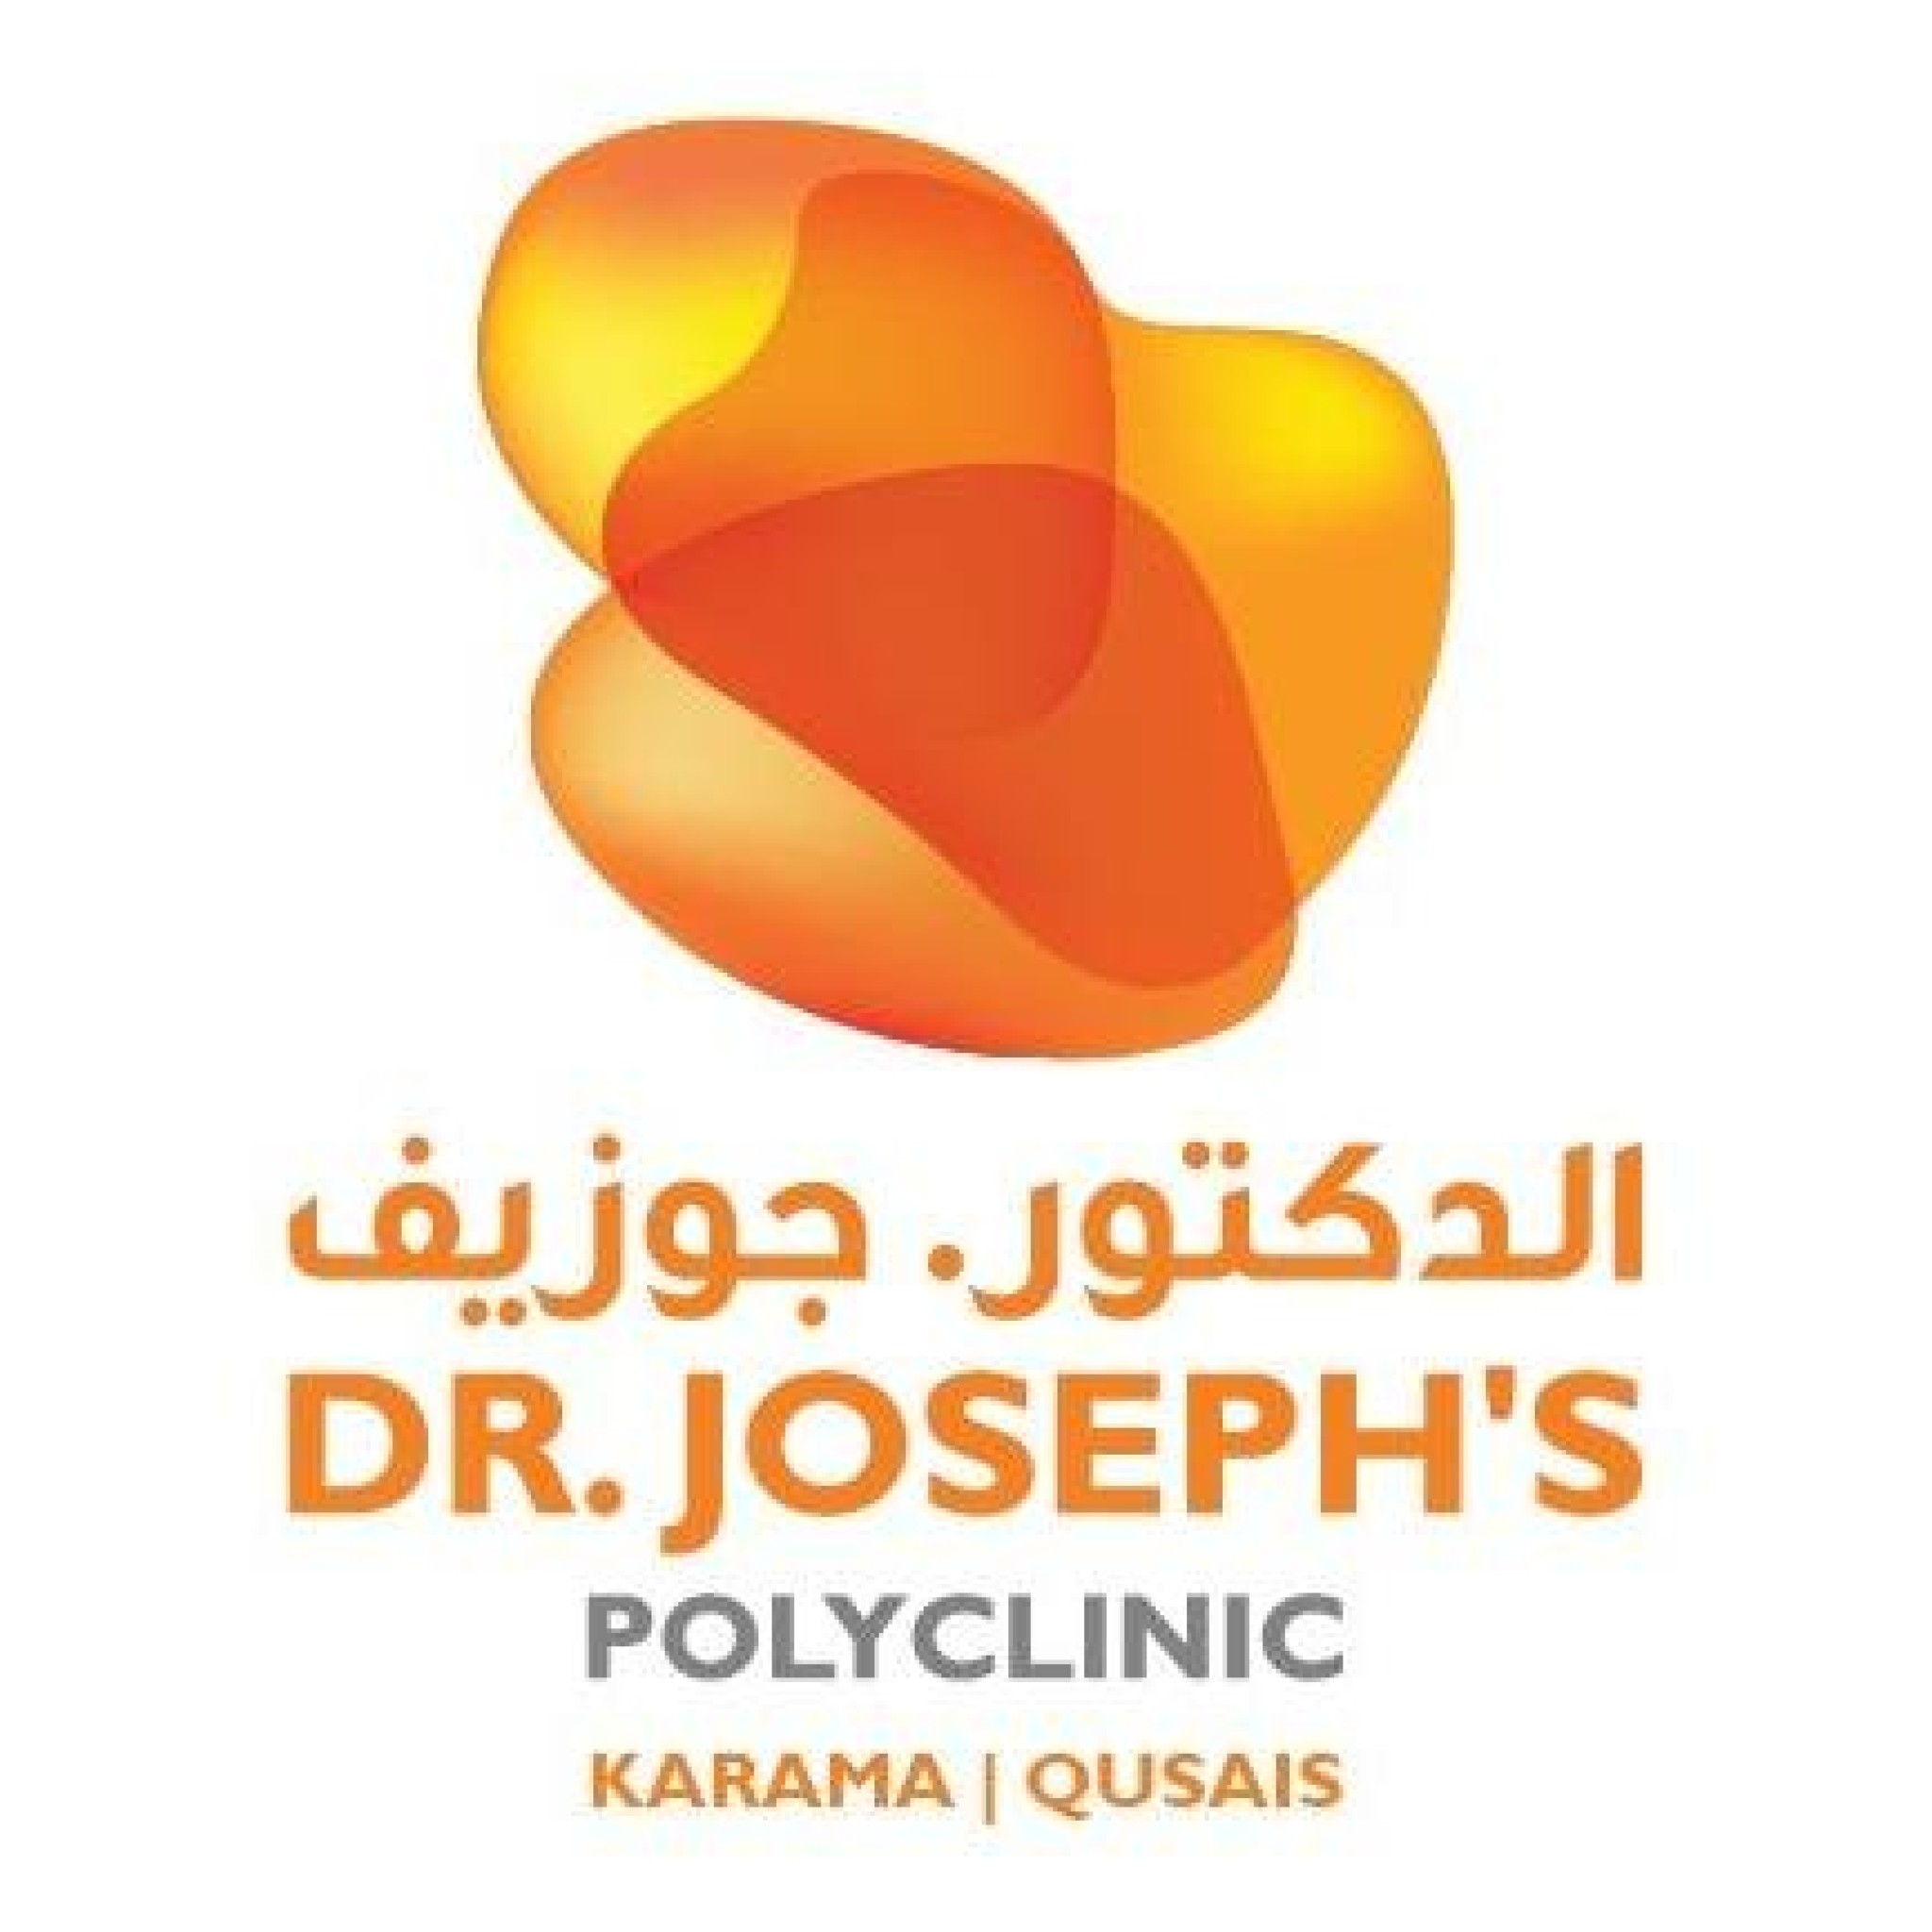 Dr Joseph Polyclinic - Karama